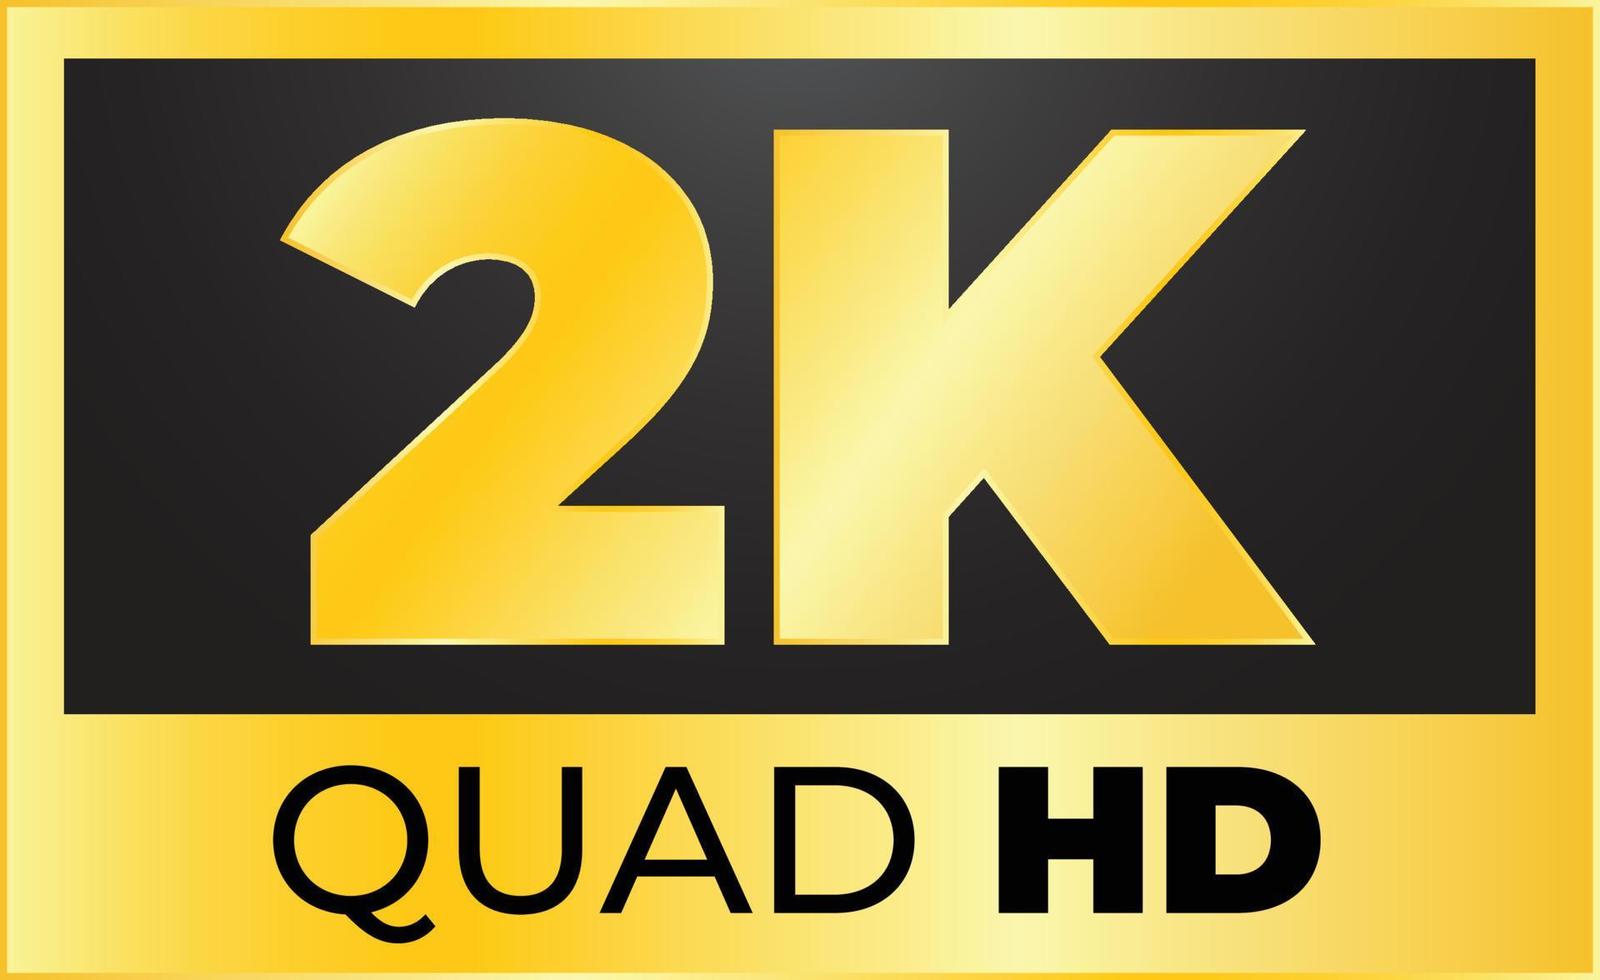 Gold 2k Quad Hd Logo Icon Vector. Quad HD 2K Resolution Golden Label vector